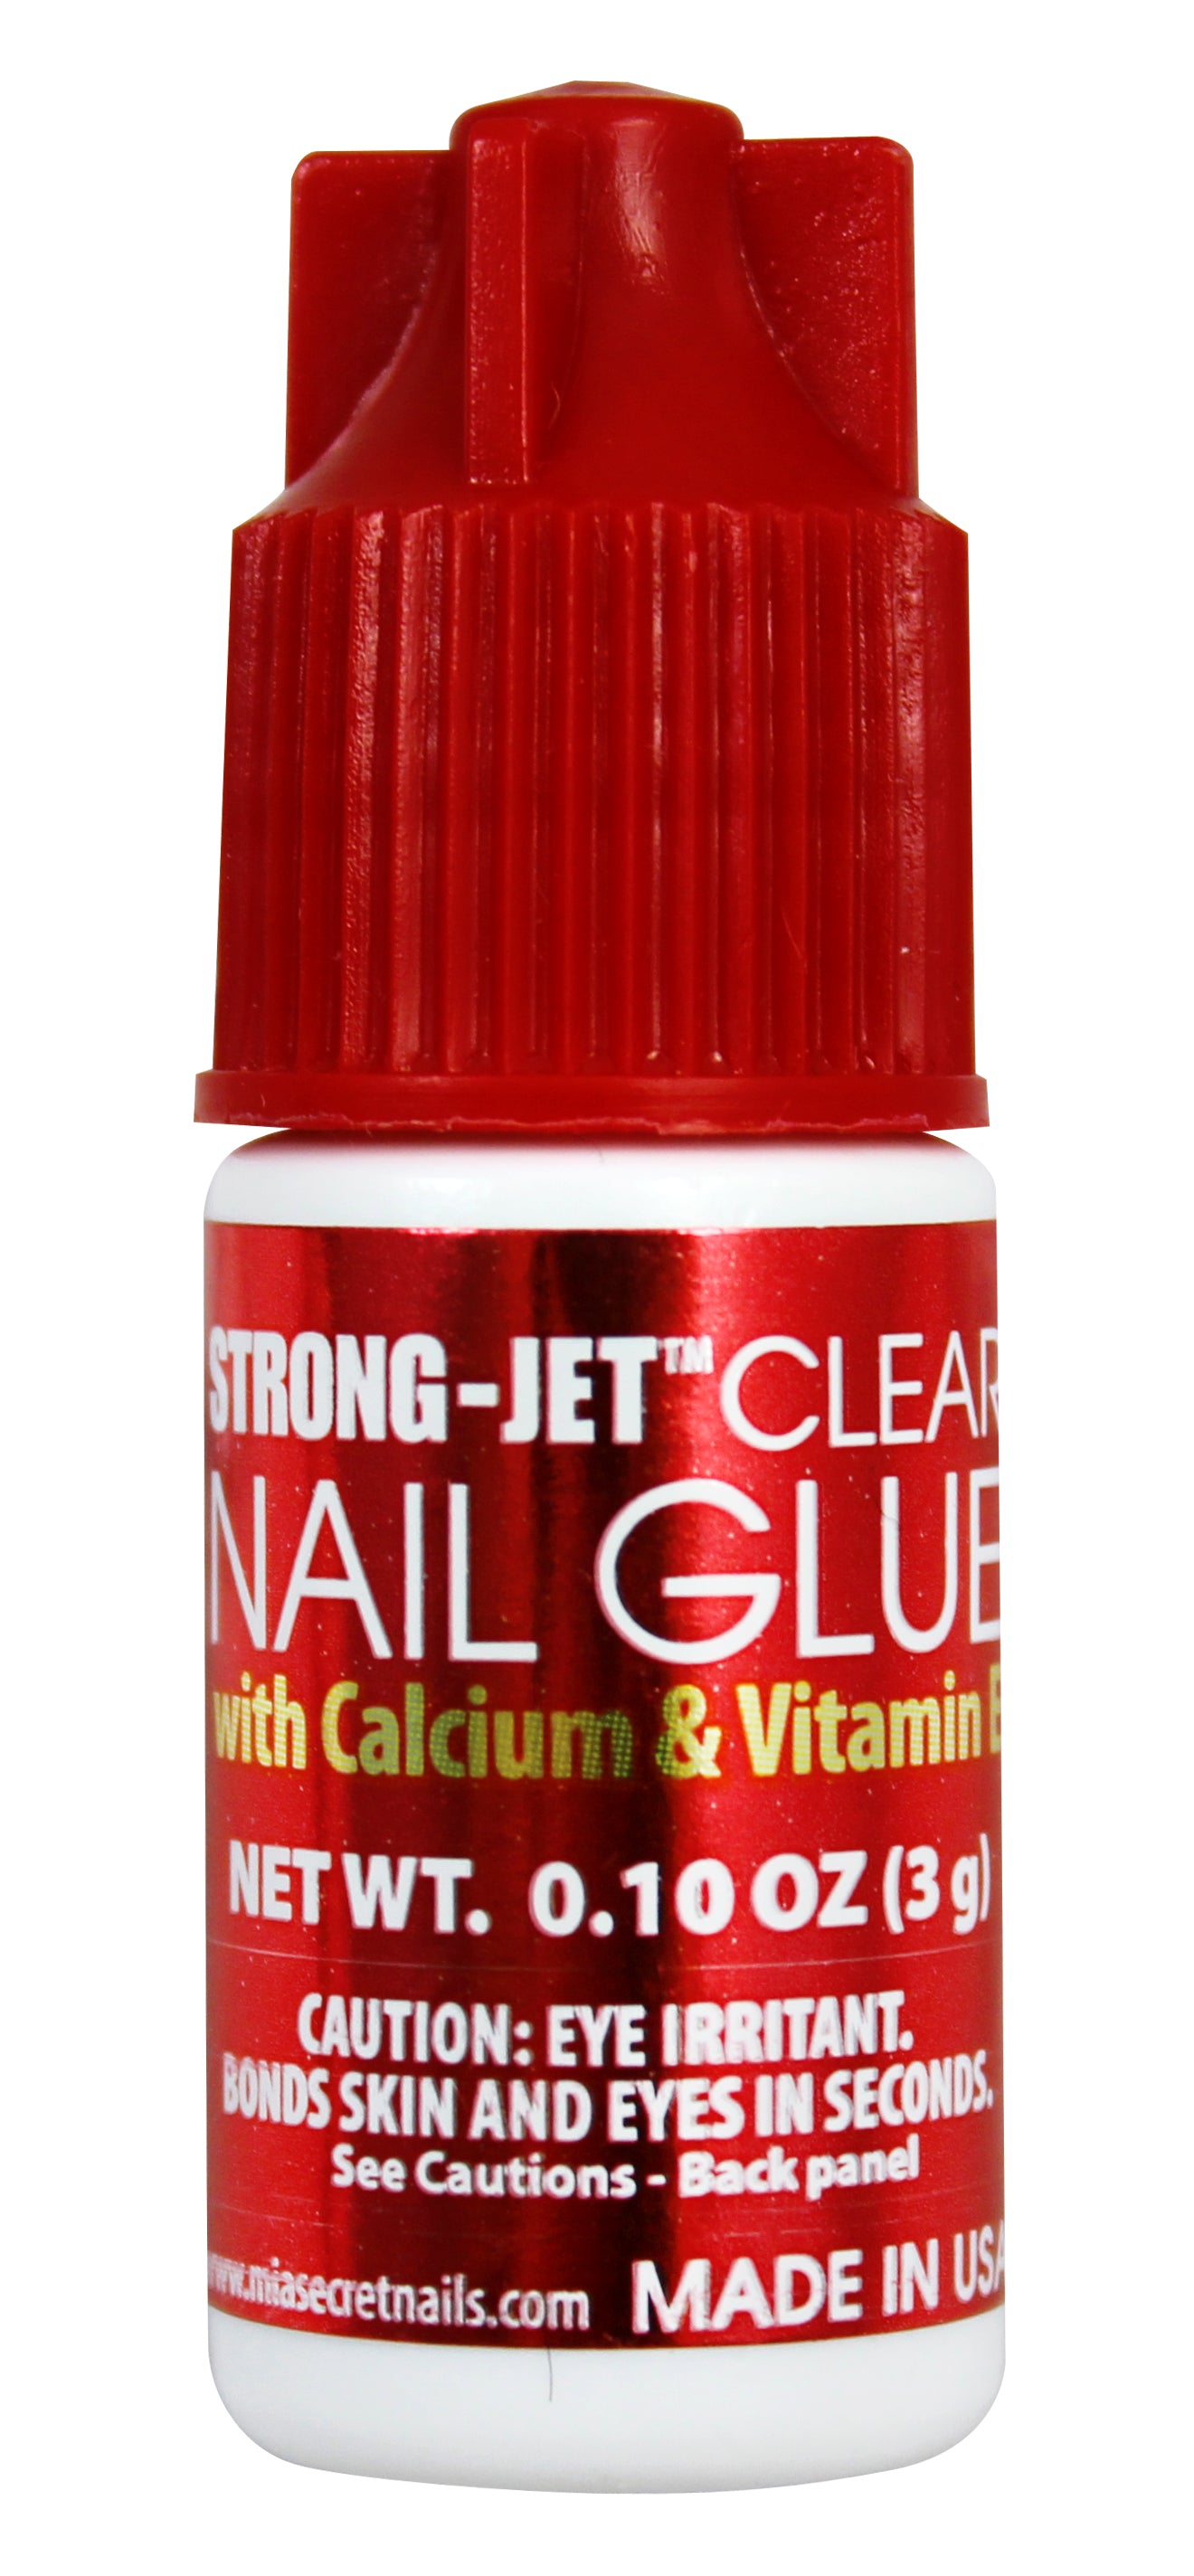 10 Best Nail Glues of 2022